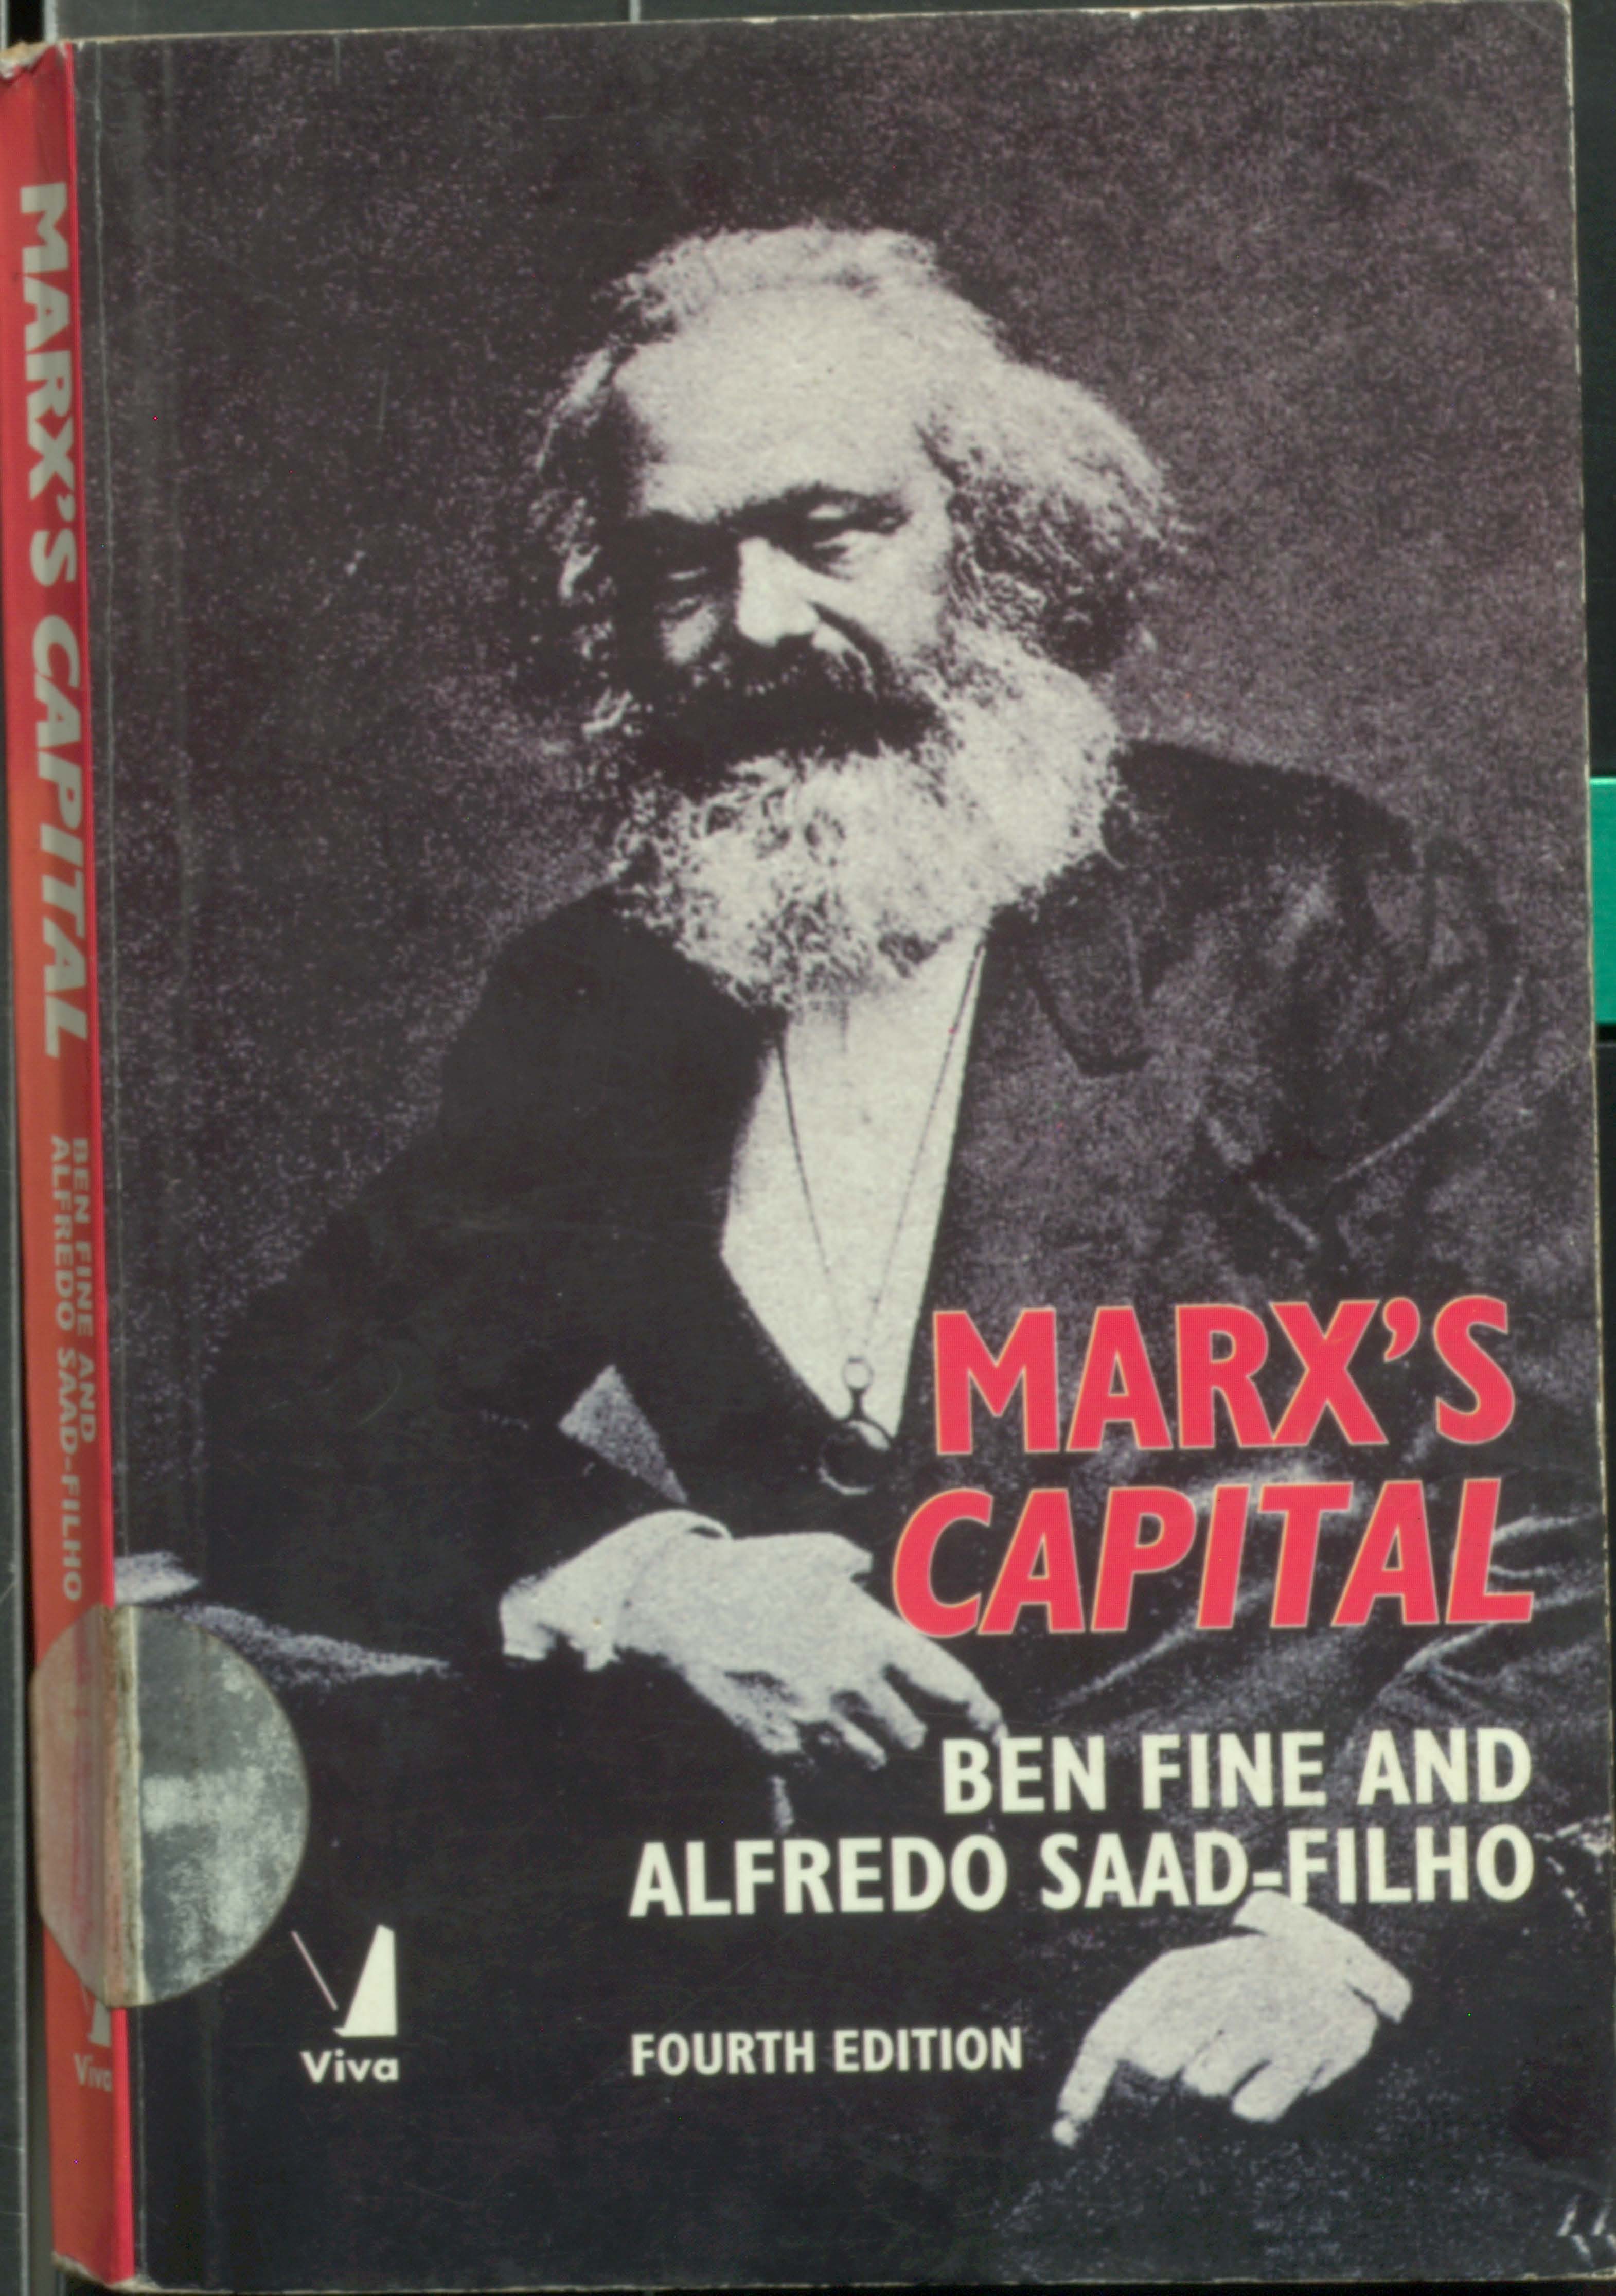 Marx's capital ben fine and alfredo saad-filho(fourth edition)